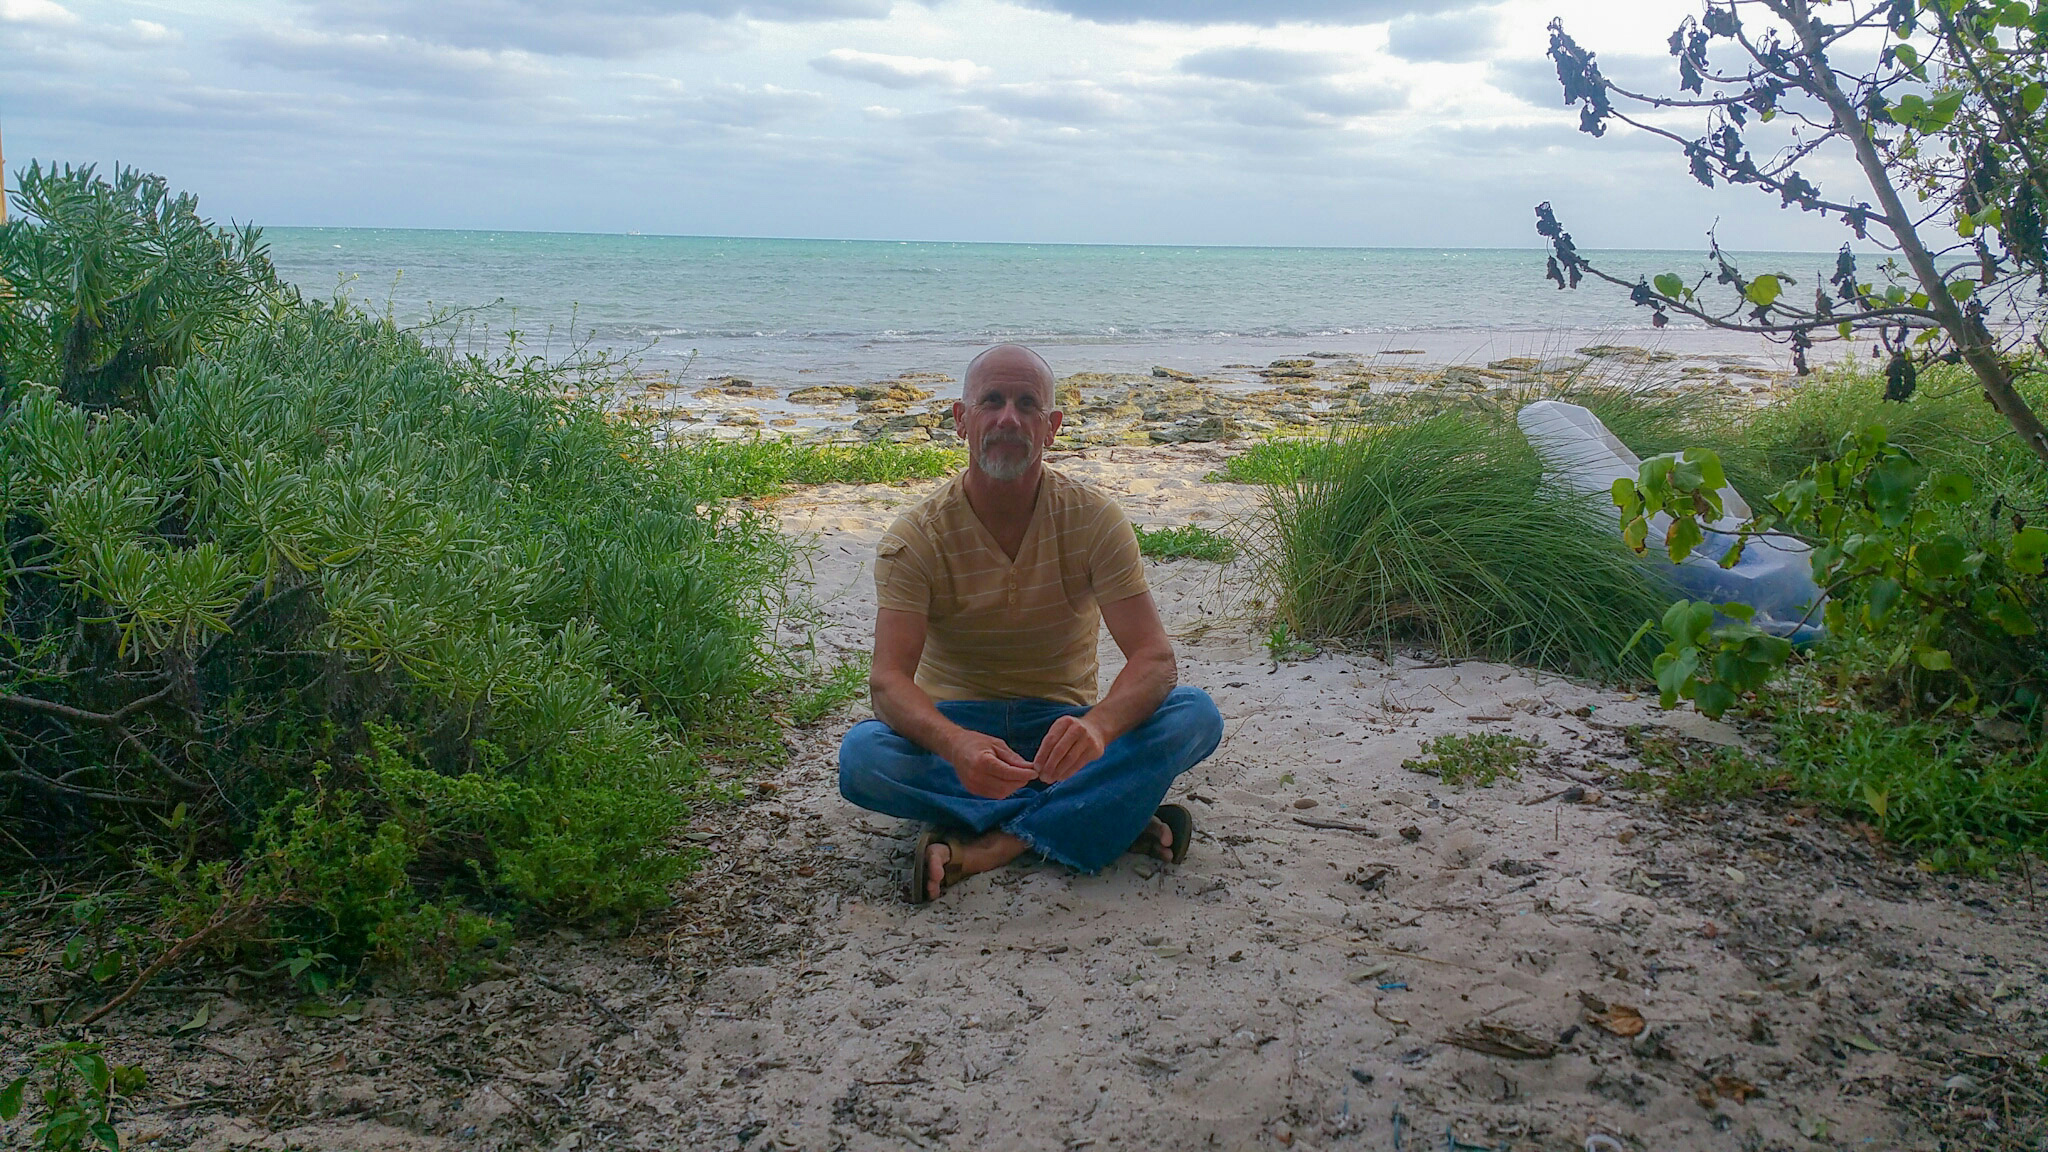 darryl moreno recommends Nude Beach Key West Florida